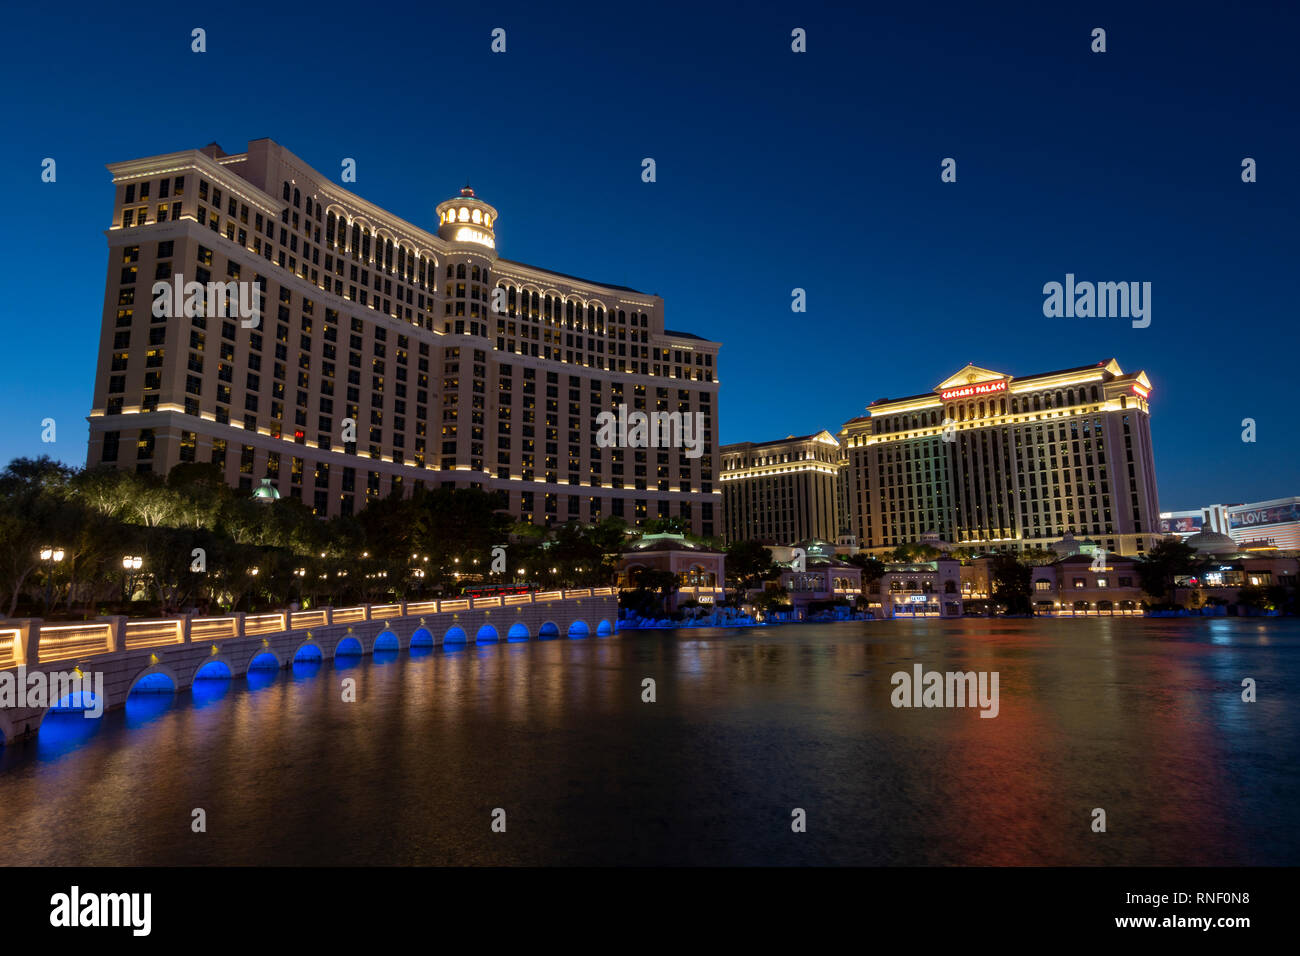 The Bellagio Las Vegas and Caesars Palace Las Vegas Hotel & Casino at night on the Strip in Las Vegas, Nevada, United States. Stock Photo